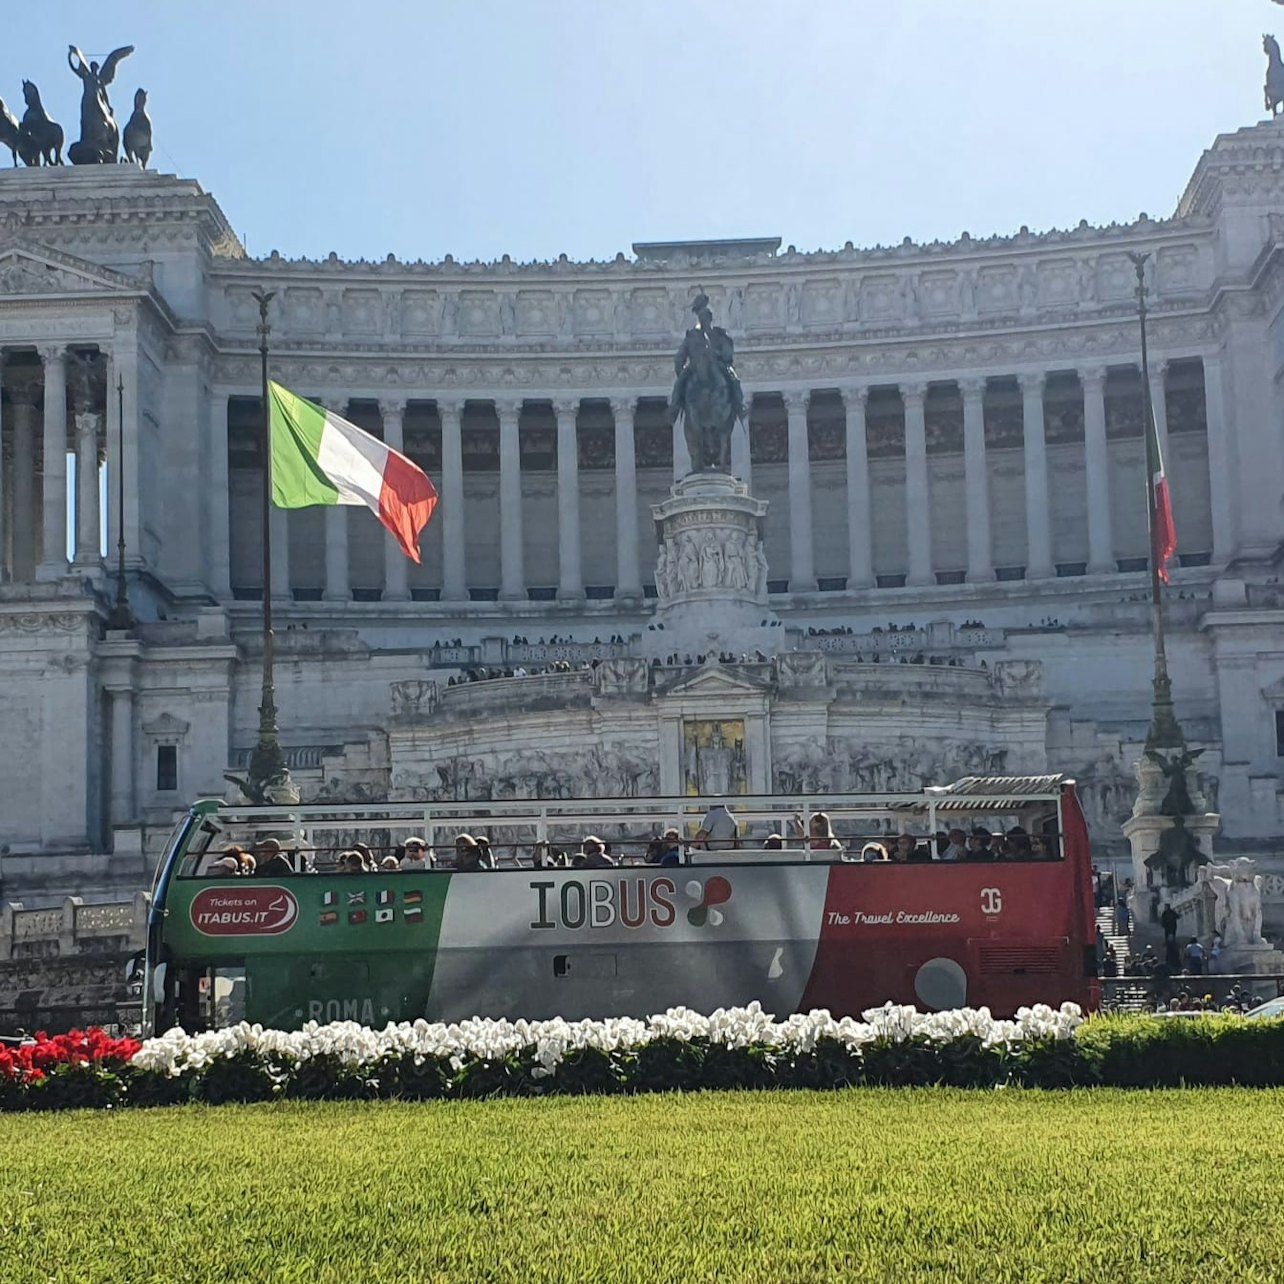 IOBUS Roma: Tour panorámico en bus turístico descubierto - Alojamientos en Roma